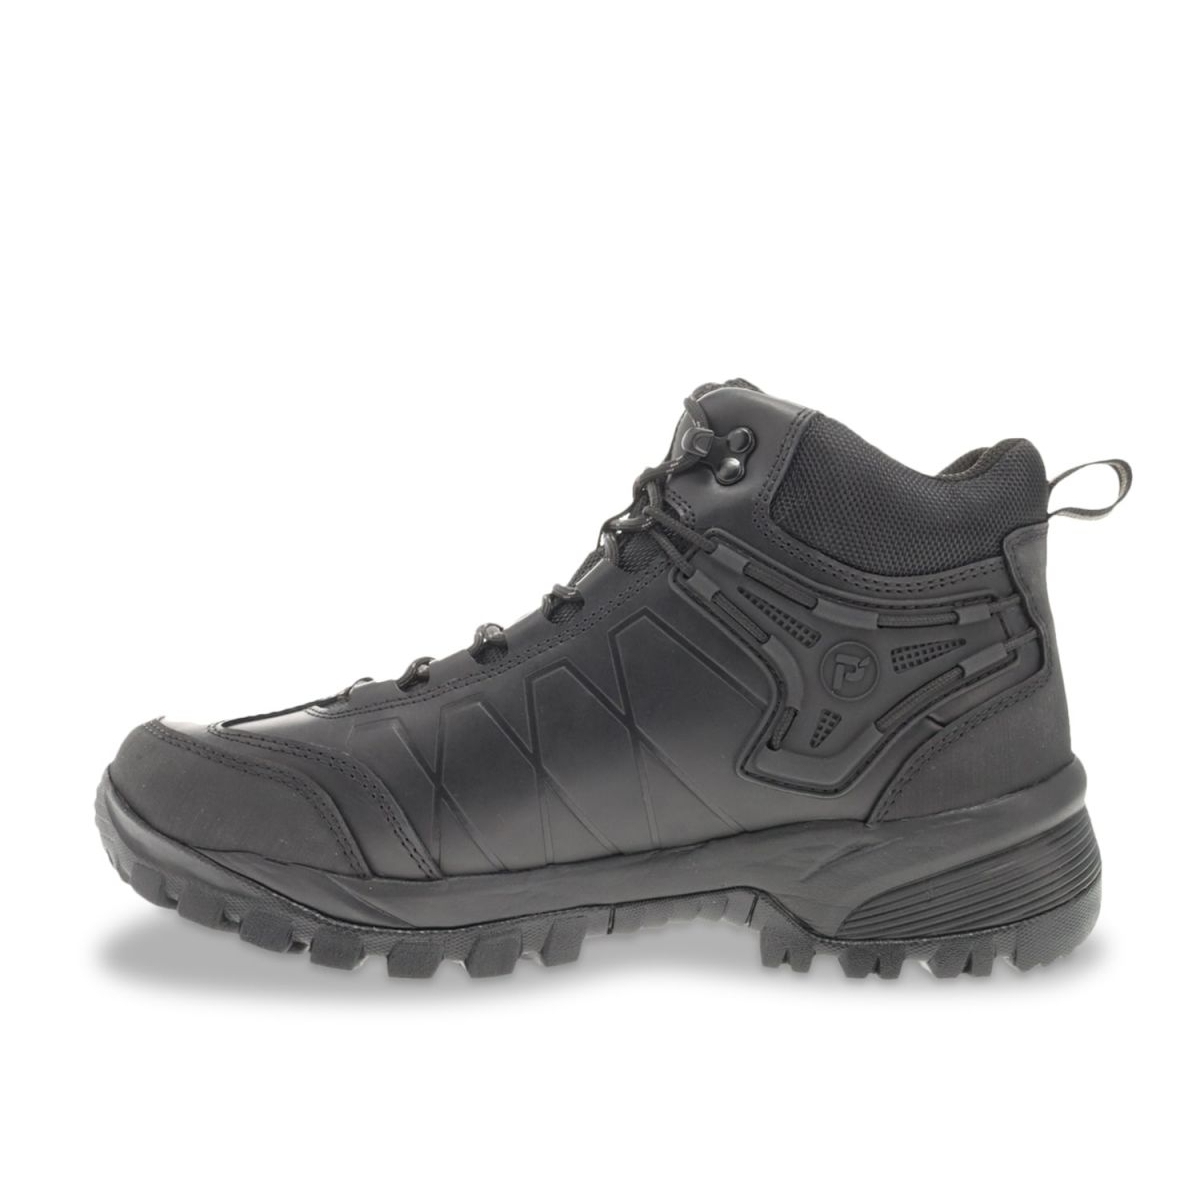 Propet Men's Ridge Walker Force Hiking Boots Black - MBA052LBLK BLACK - BLACK, 9 XX-Wide